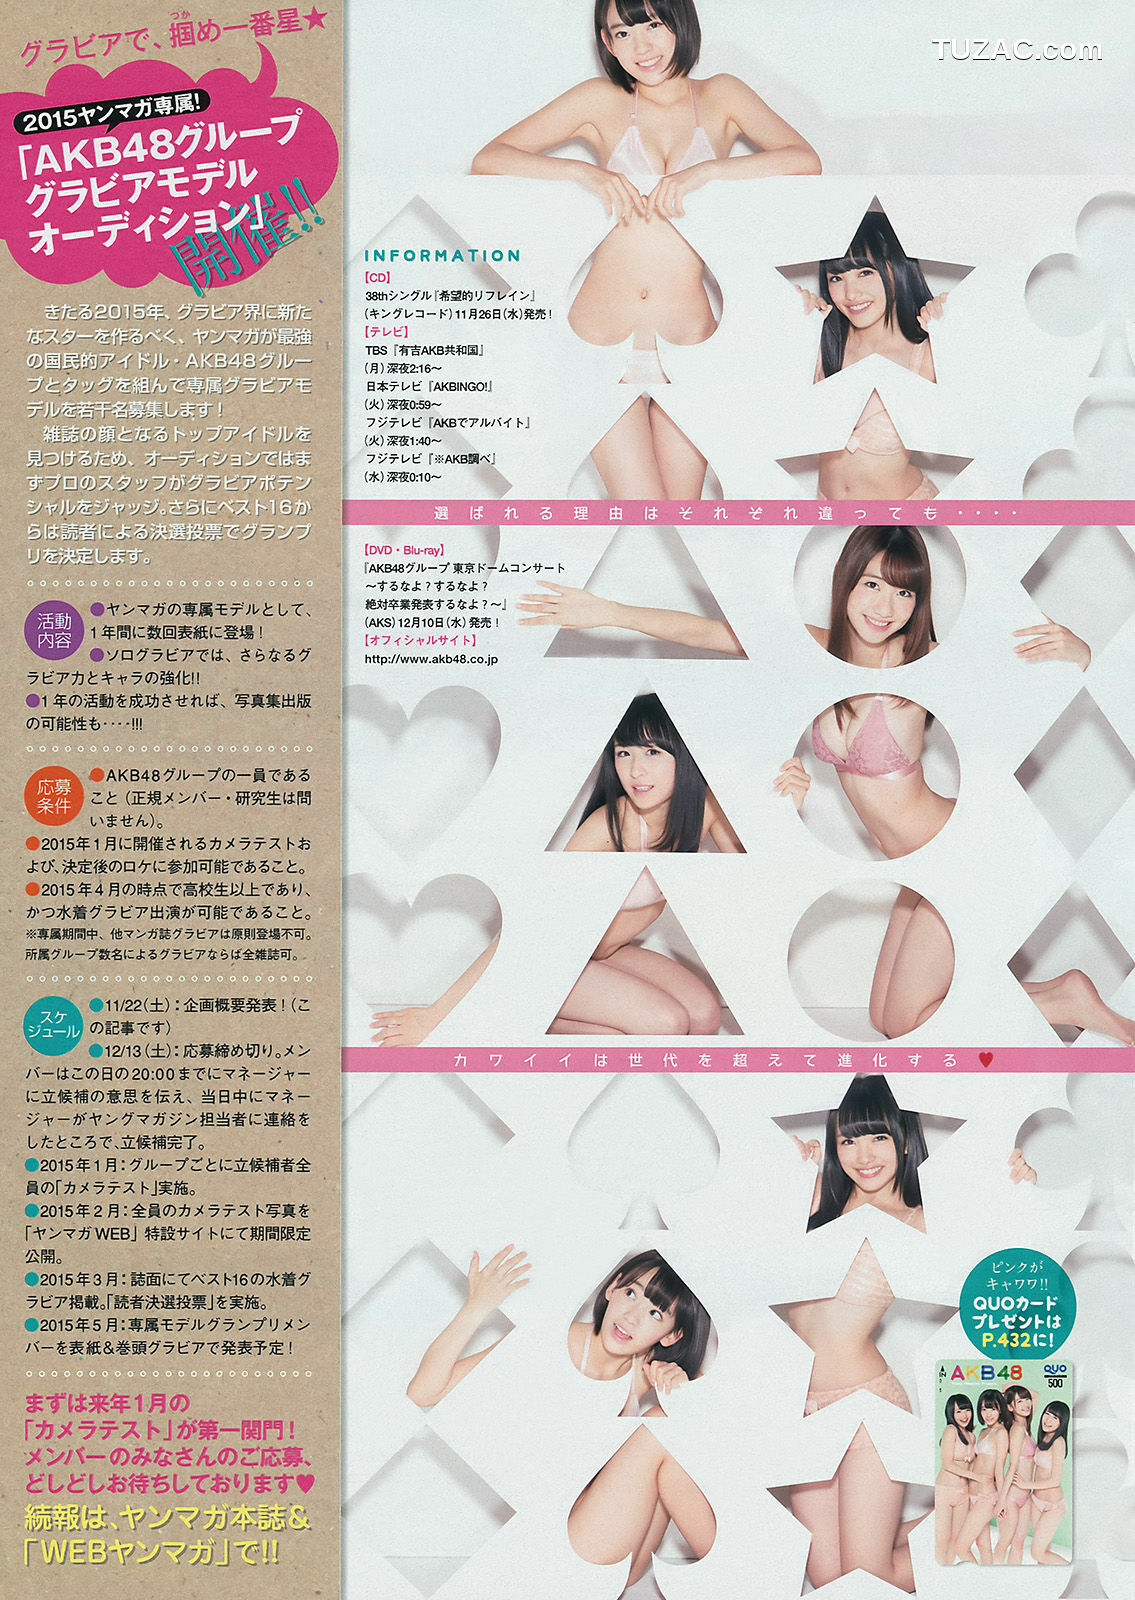 Young Magazine杂志写真_ AKB48 佐野ひなこ 2014年No.52 写真杂志[14P]